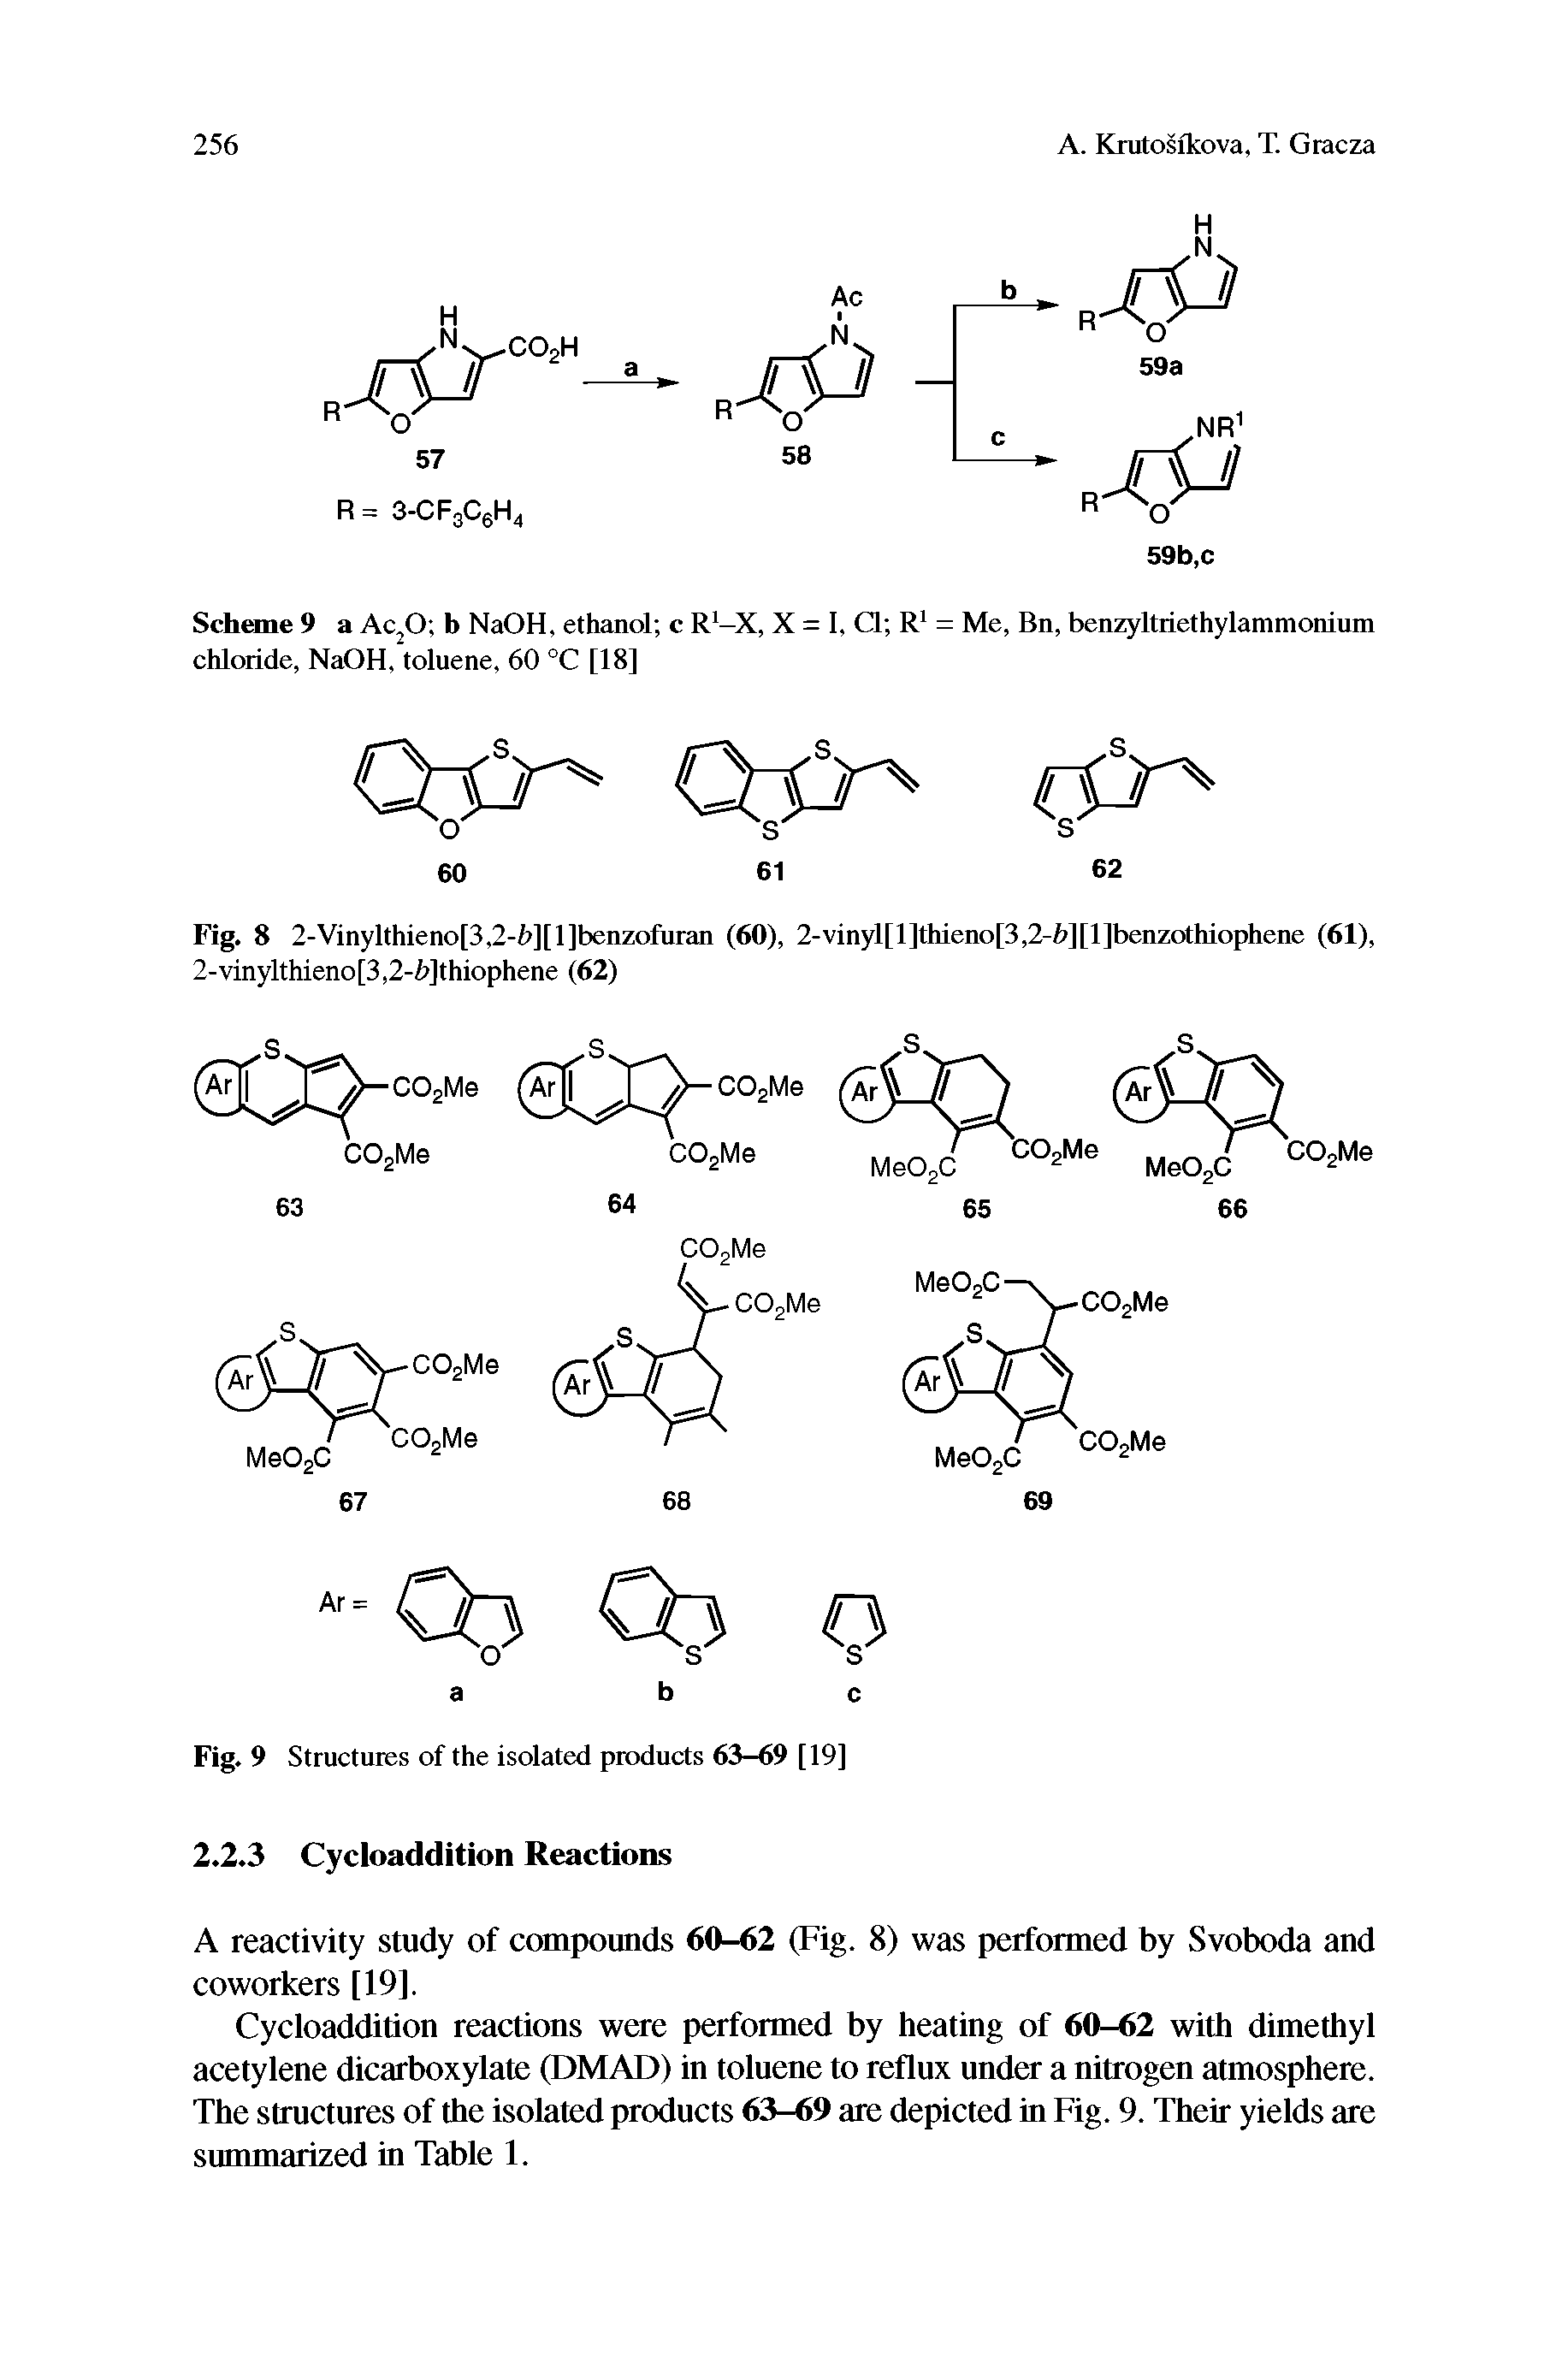 Fig. 8 2-Vinylthieno[3,2-h][l]benzofuran (60), 2-vinyl[l]thieno[3,2-h][l]benzothiophene (61), 2-vinylthieno[3,2-h]thiophene (62)...